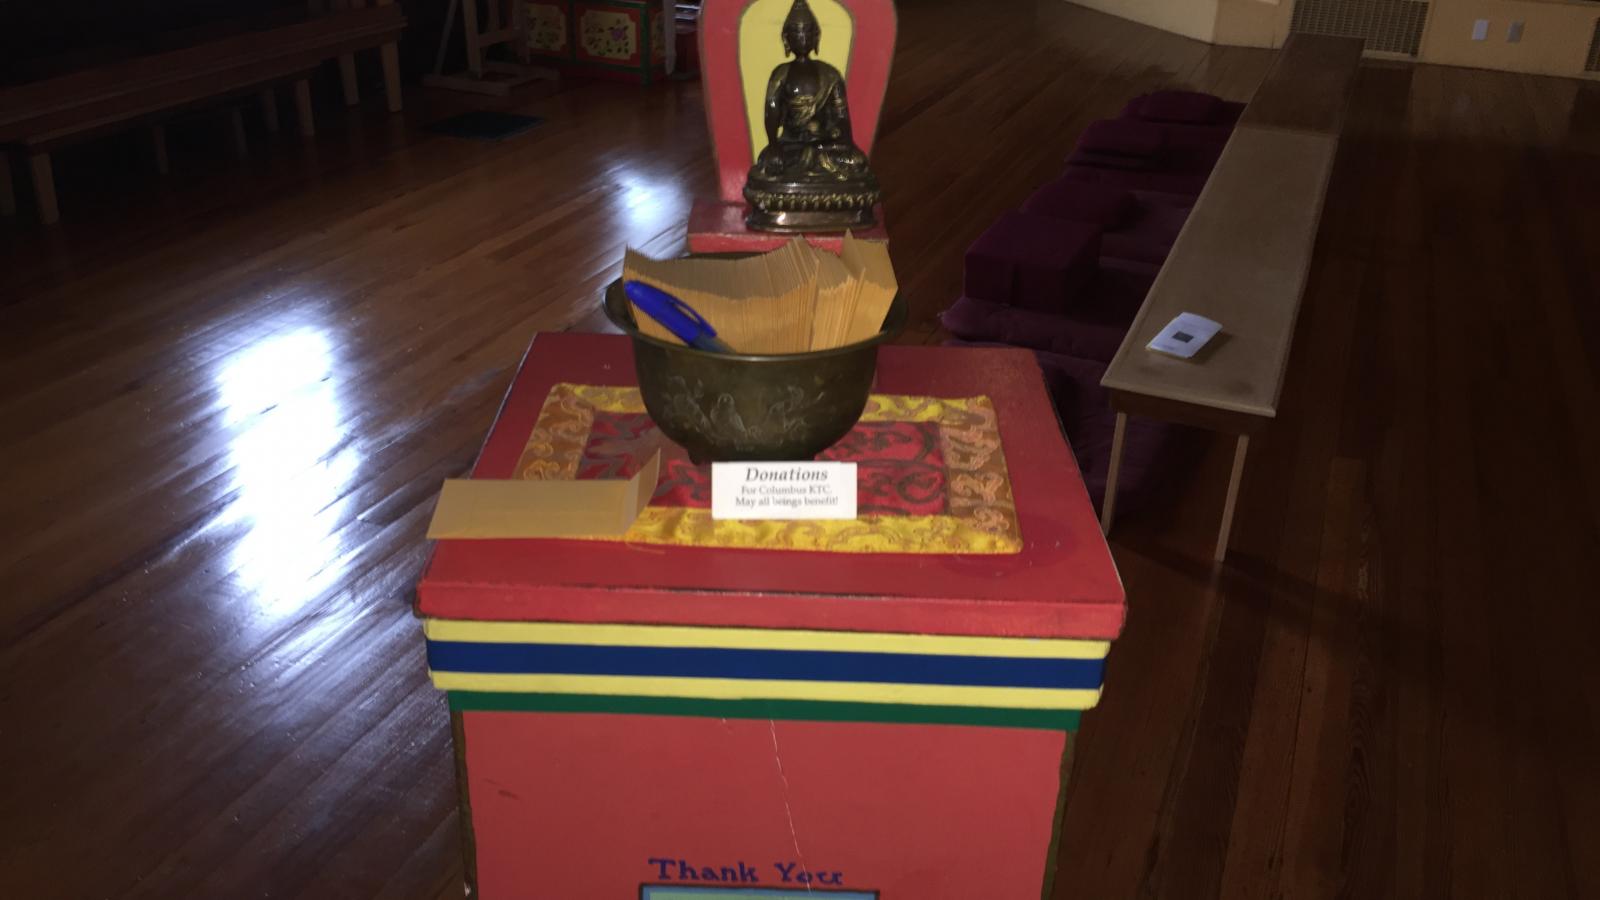 Donation box for the Karma Thegsum Choling Meditation Center